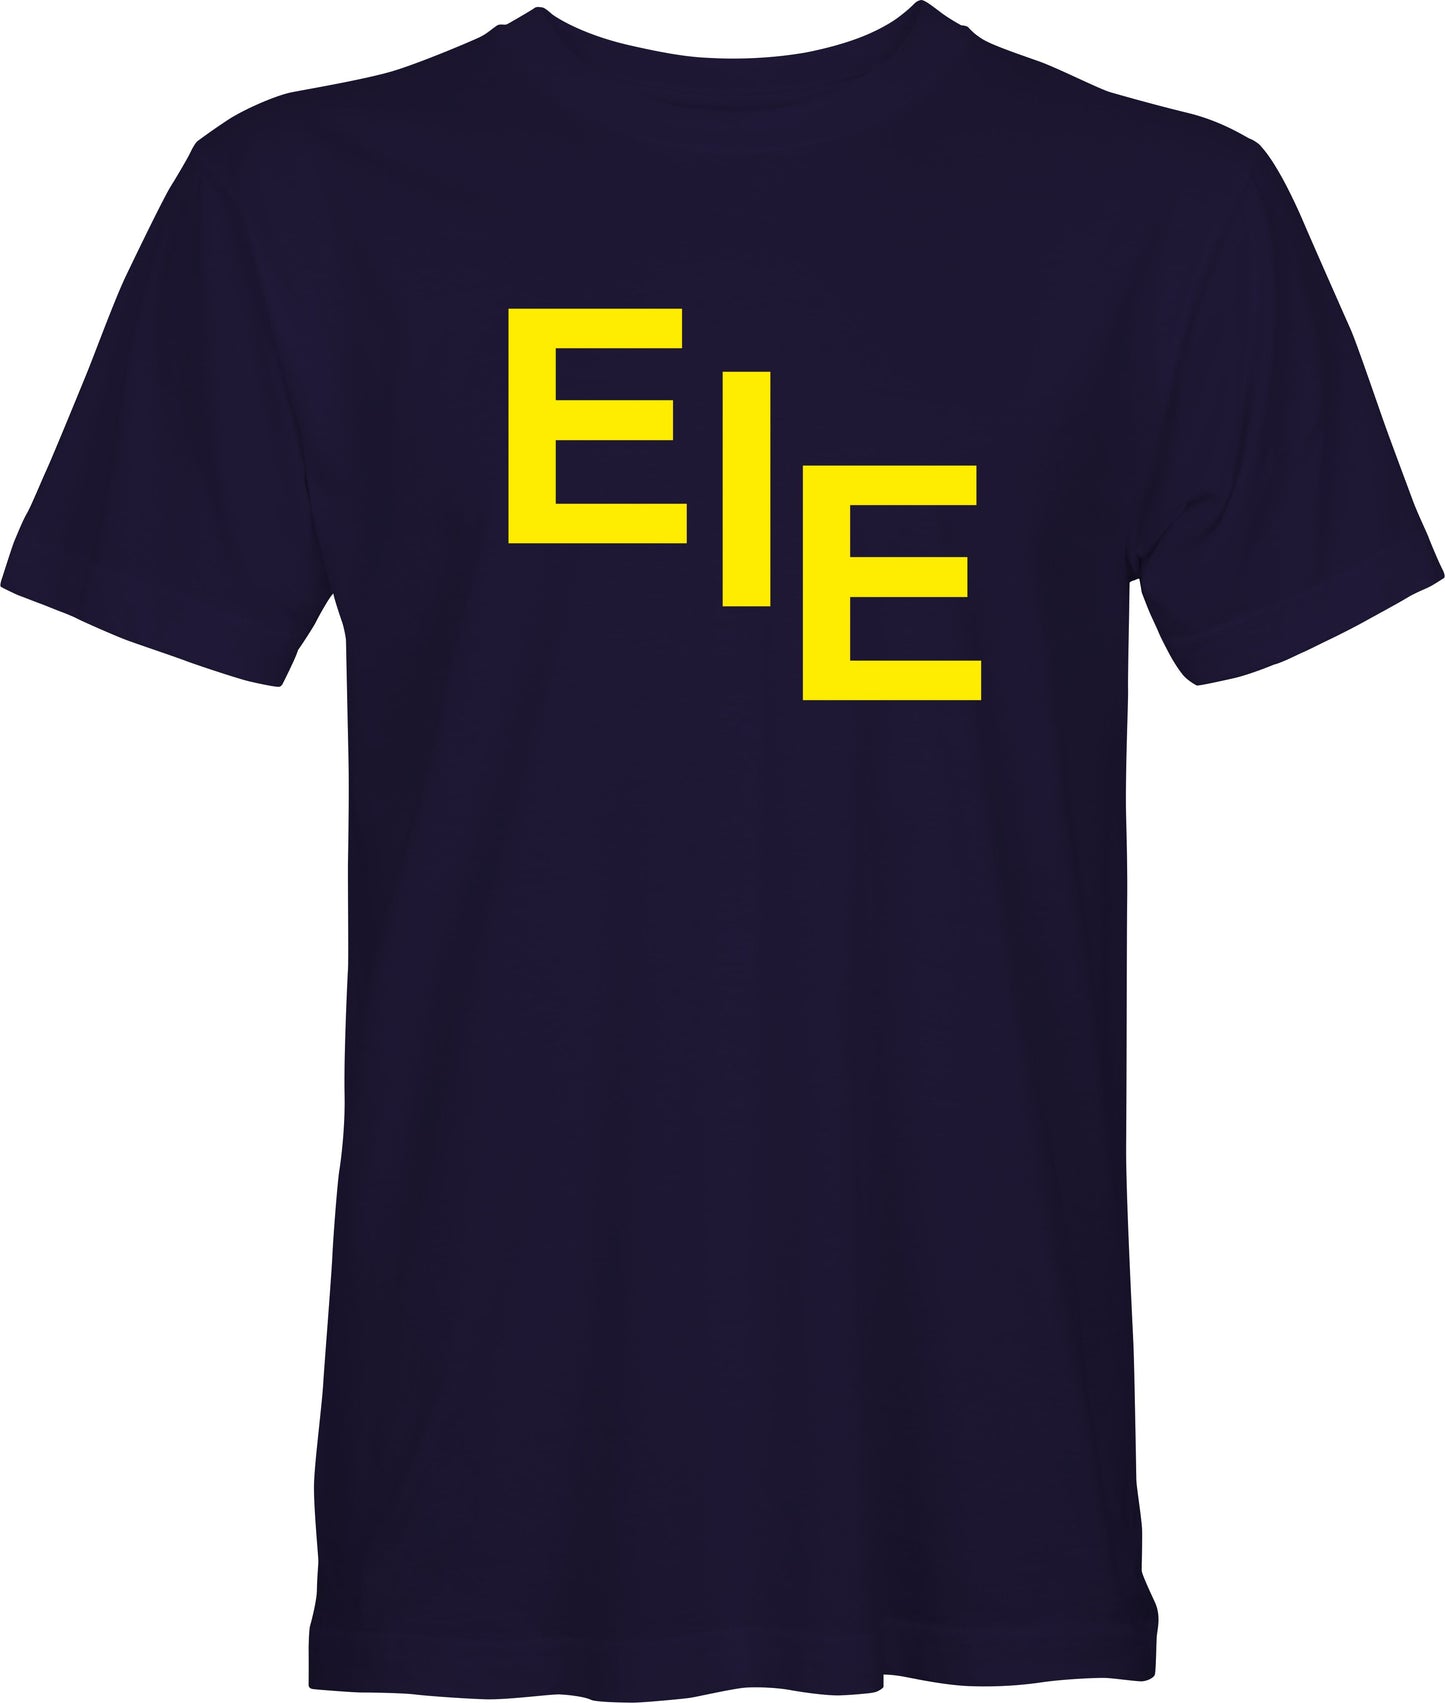 EIE - T-Shirt (Black Navy Red grey Pink)